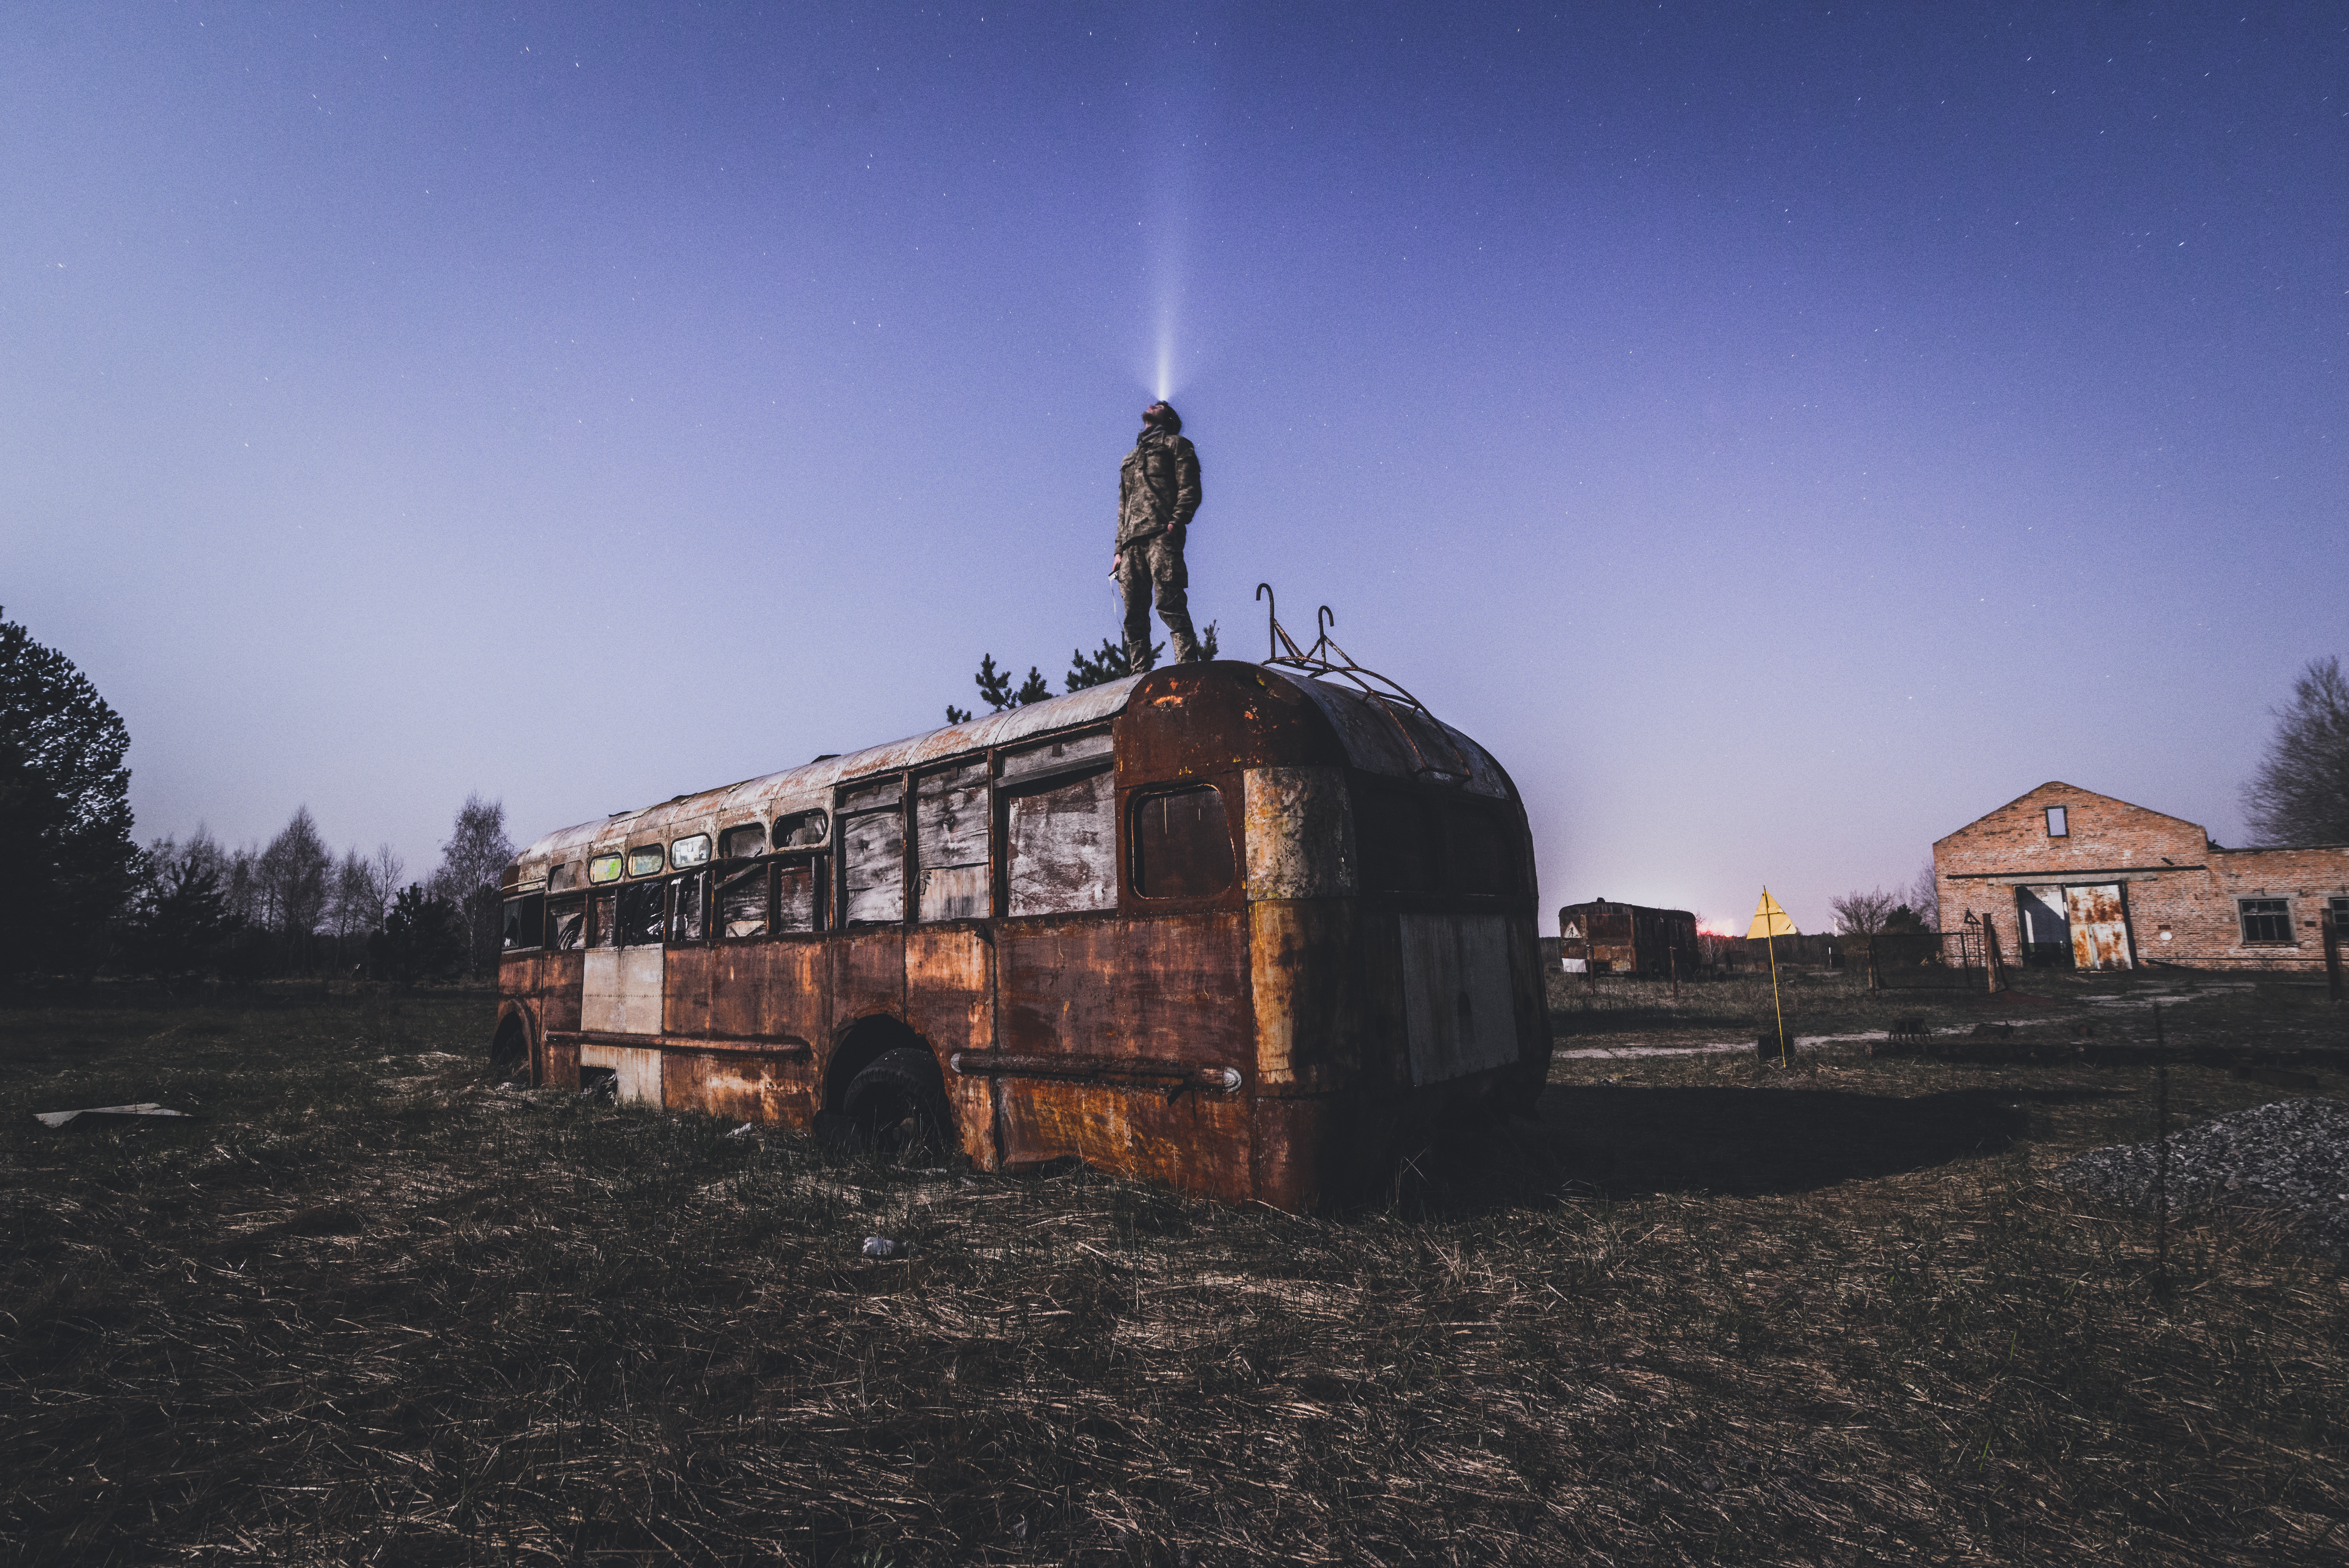 Night Light in Silent Chernobyl